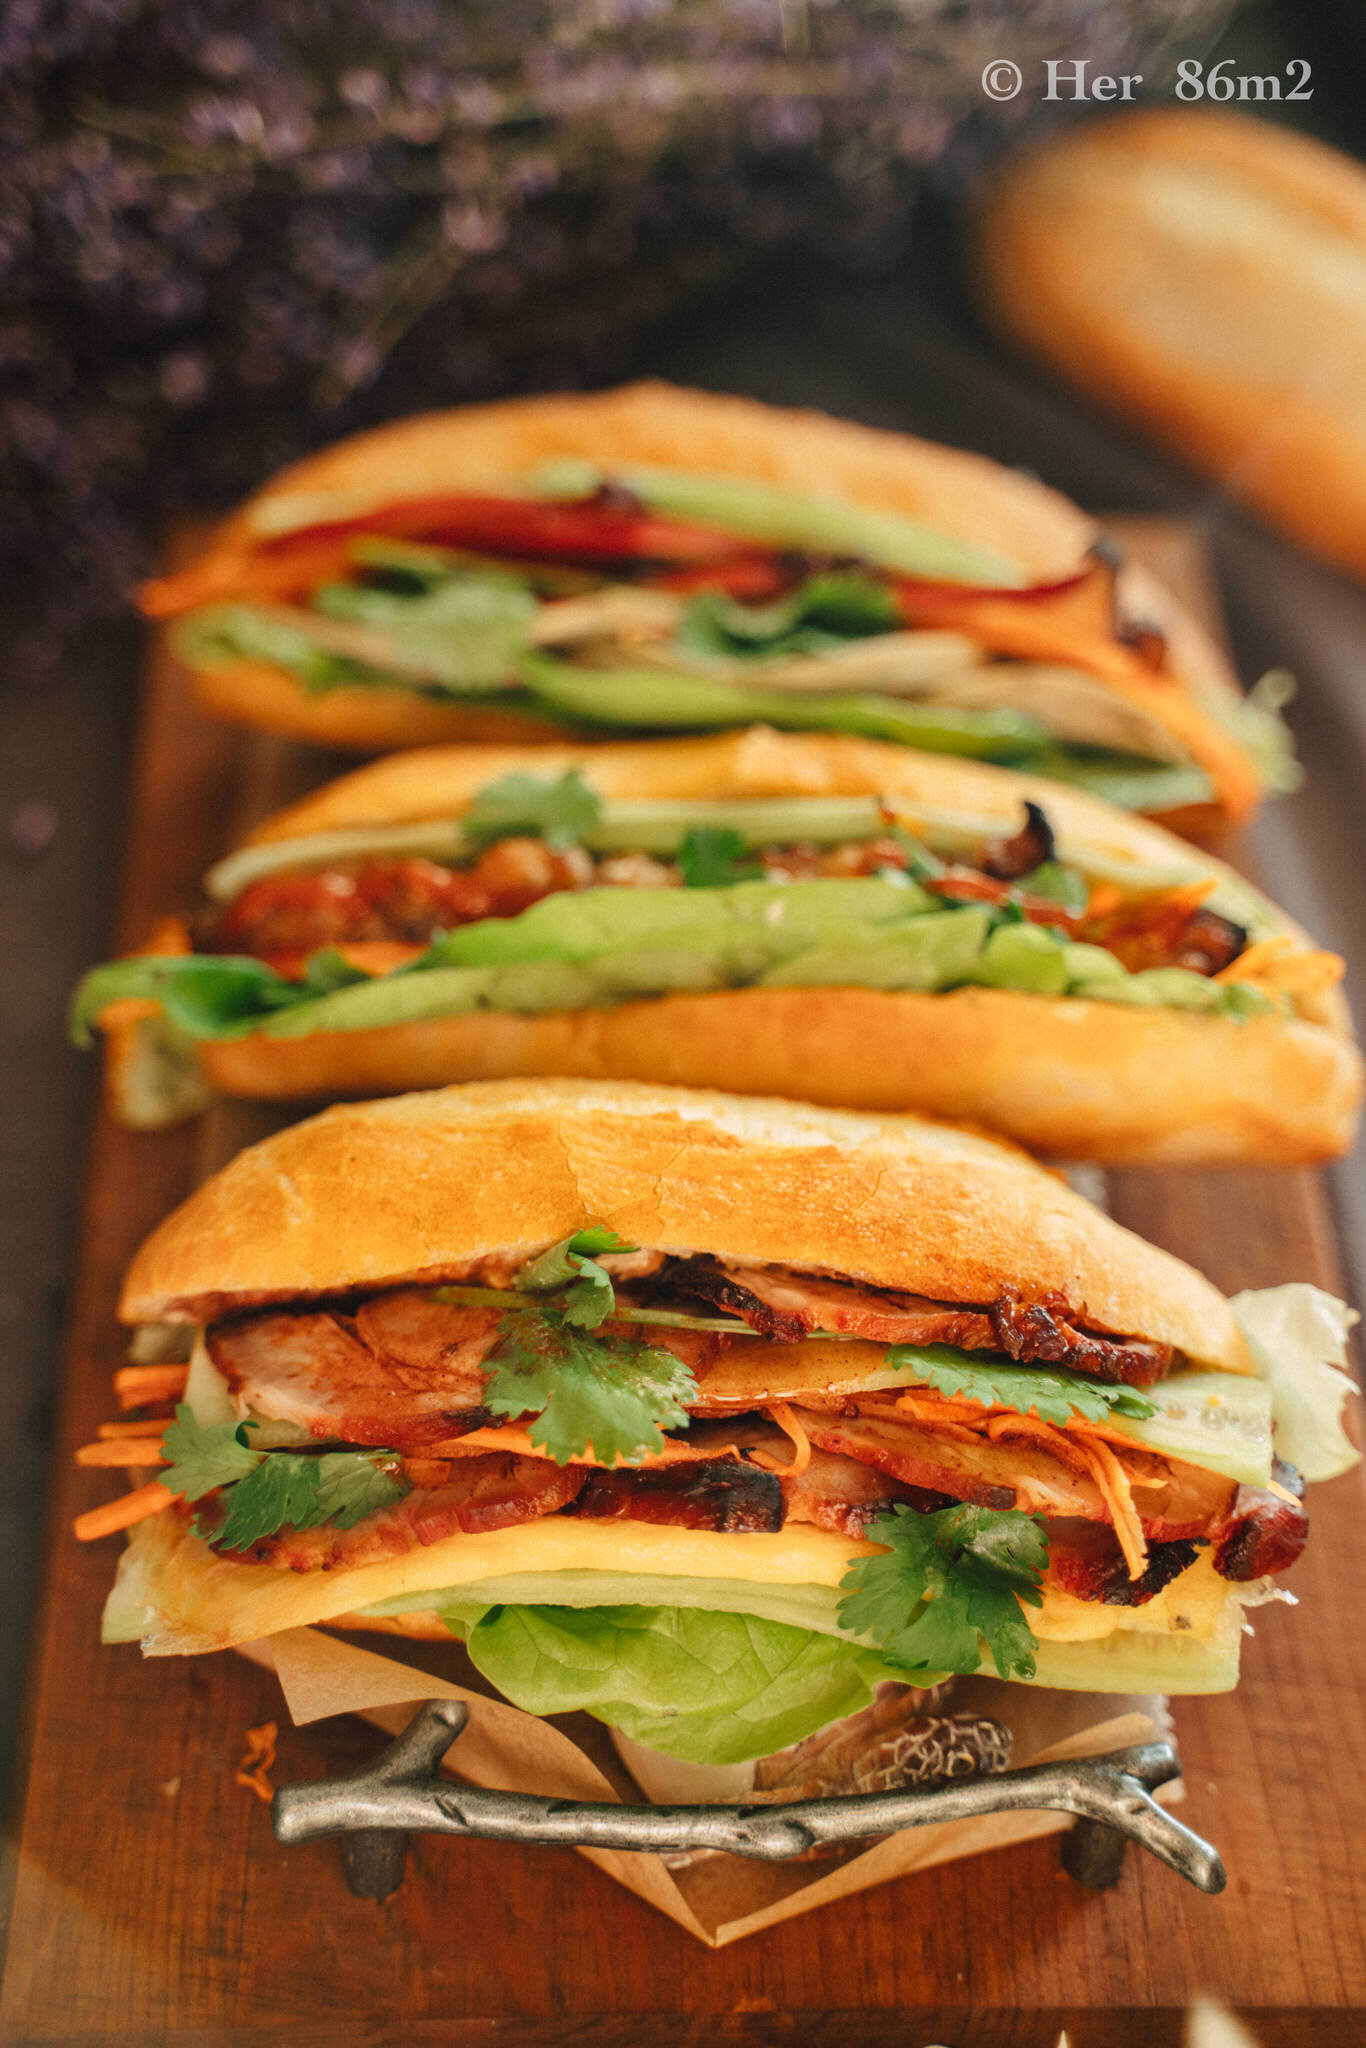 Bánh Mì Việt Nam | Vietnamese Baguette — HER 86m2 - by Thuy Dao